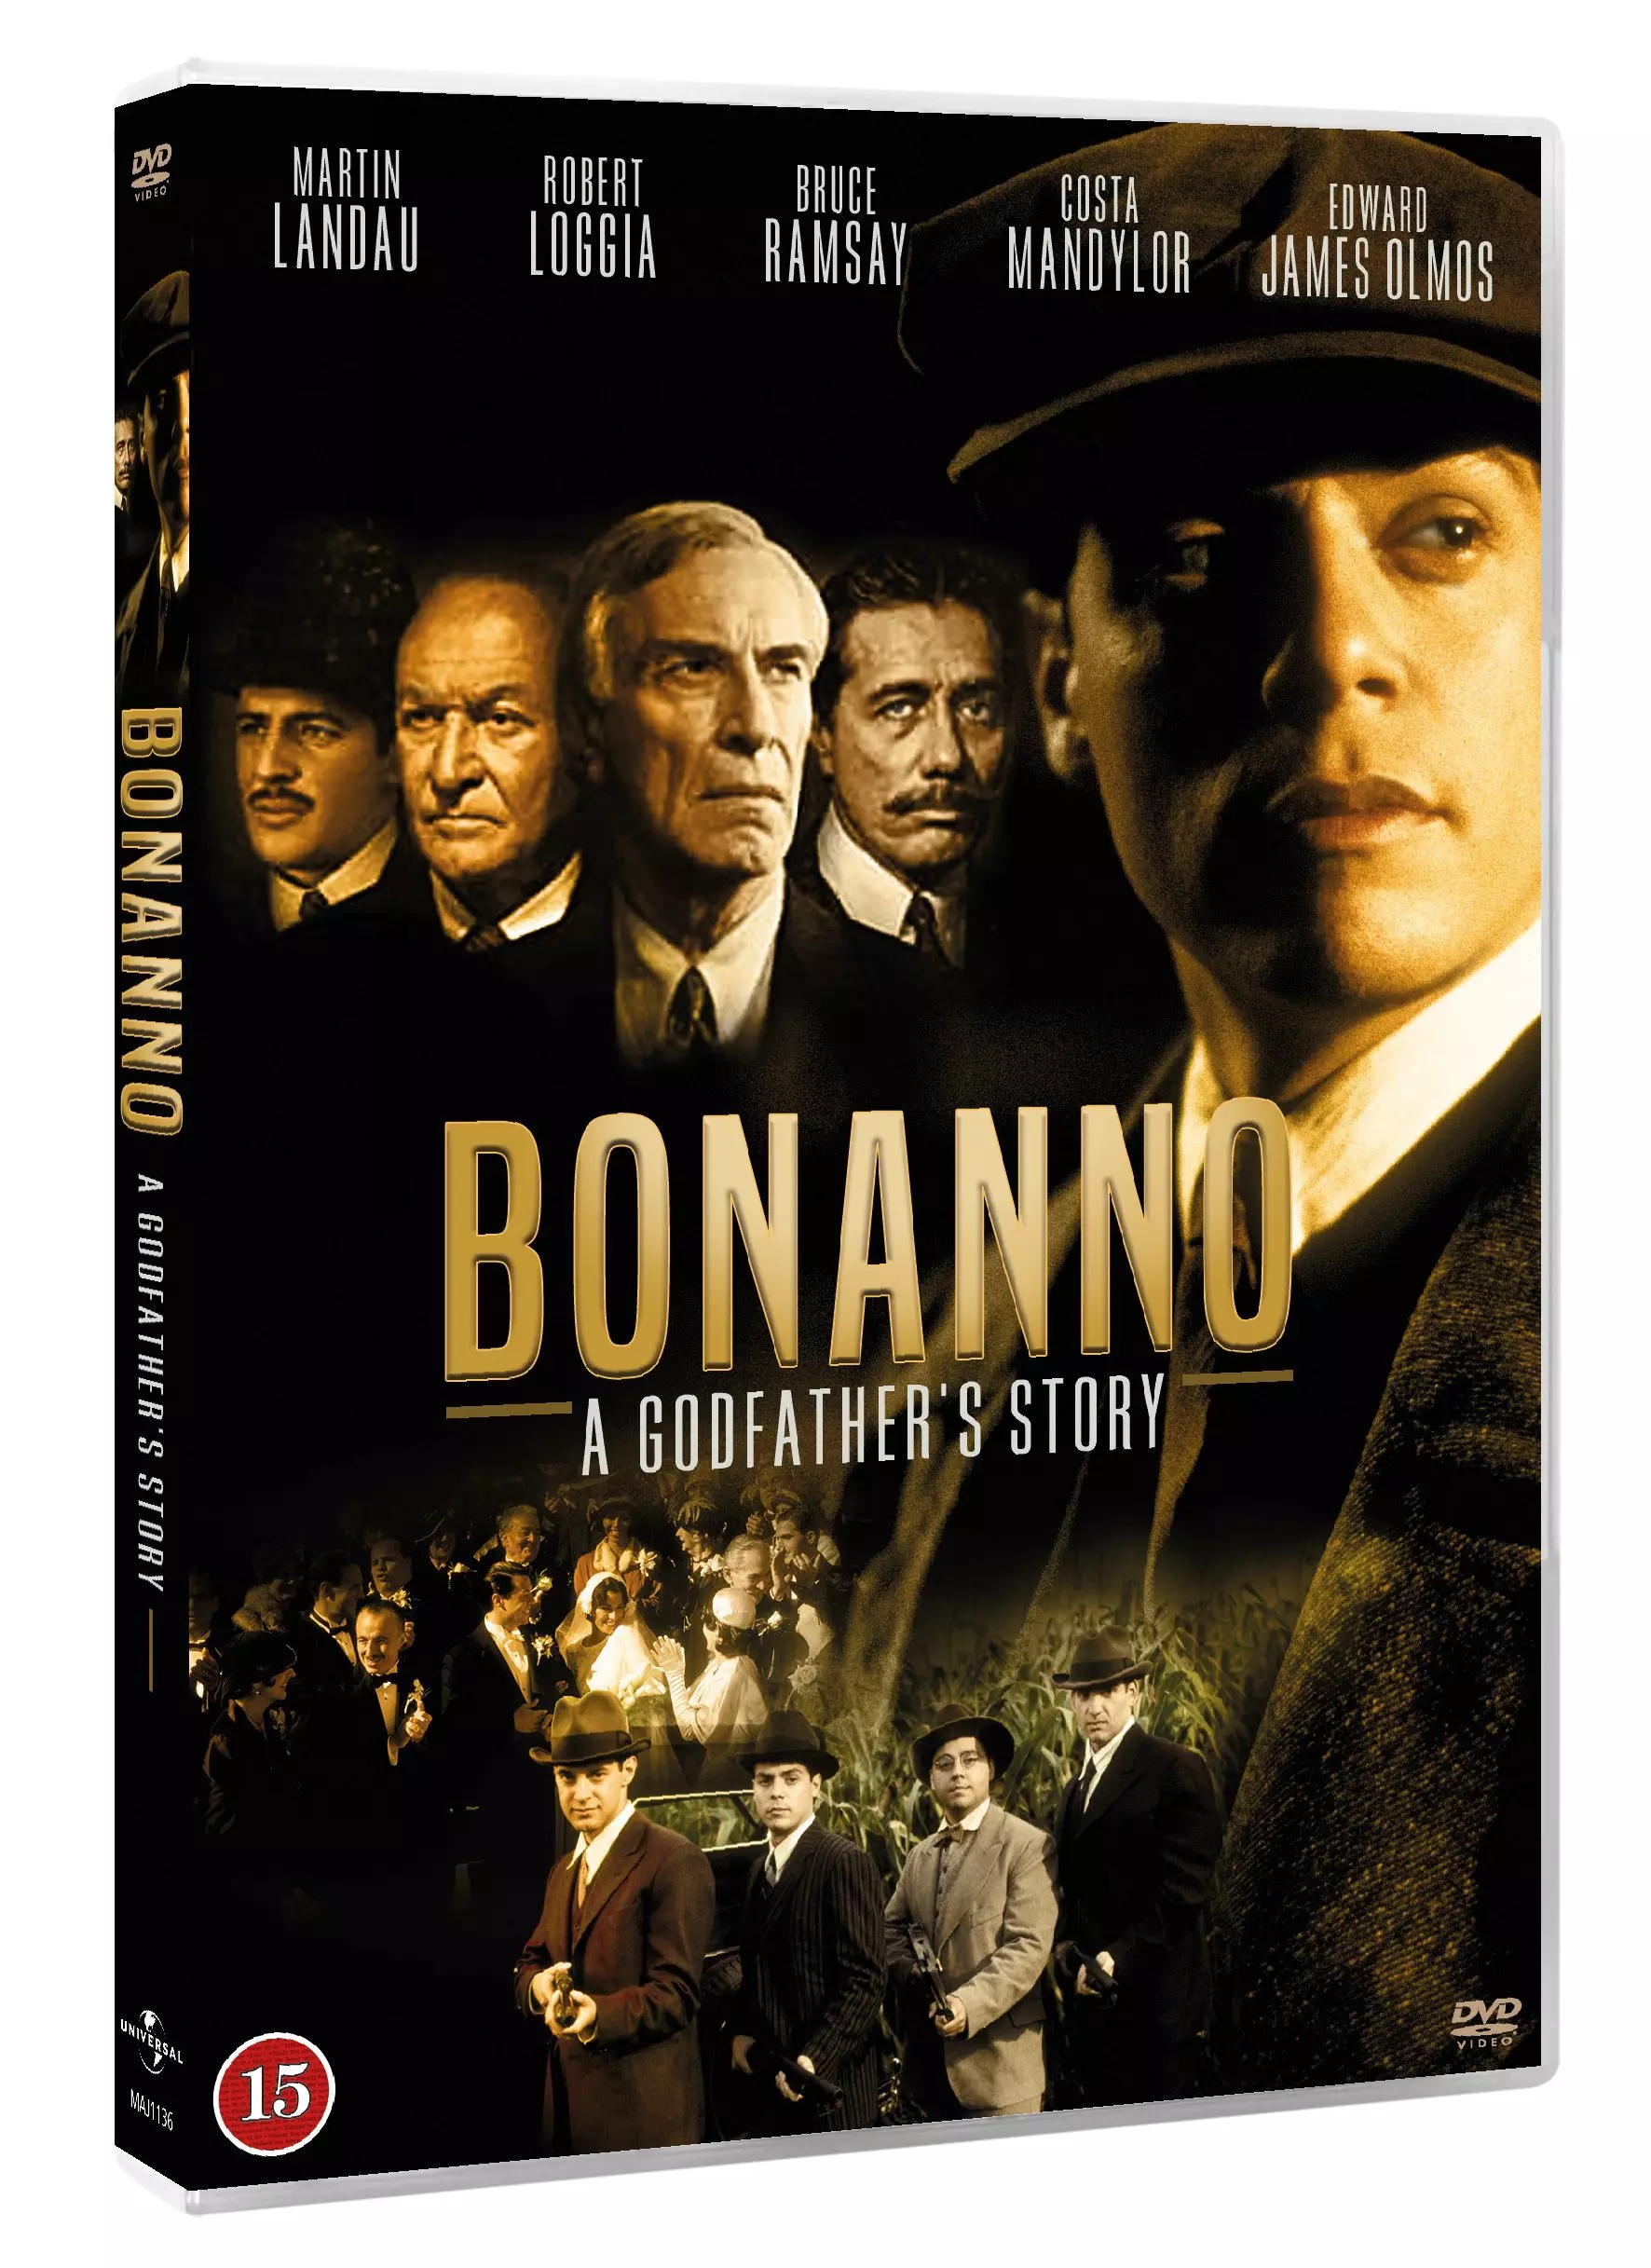 Bonanno: A Godfathers Story